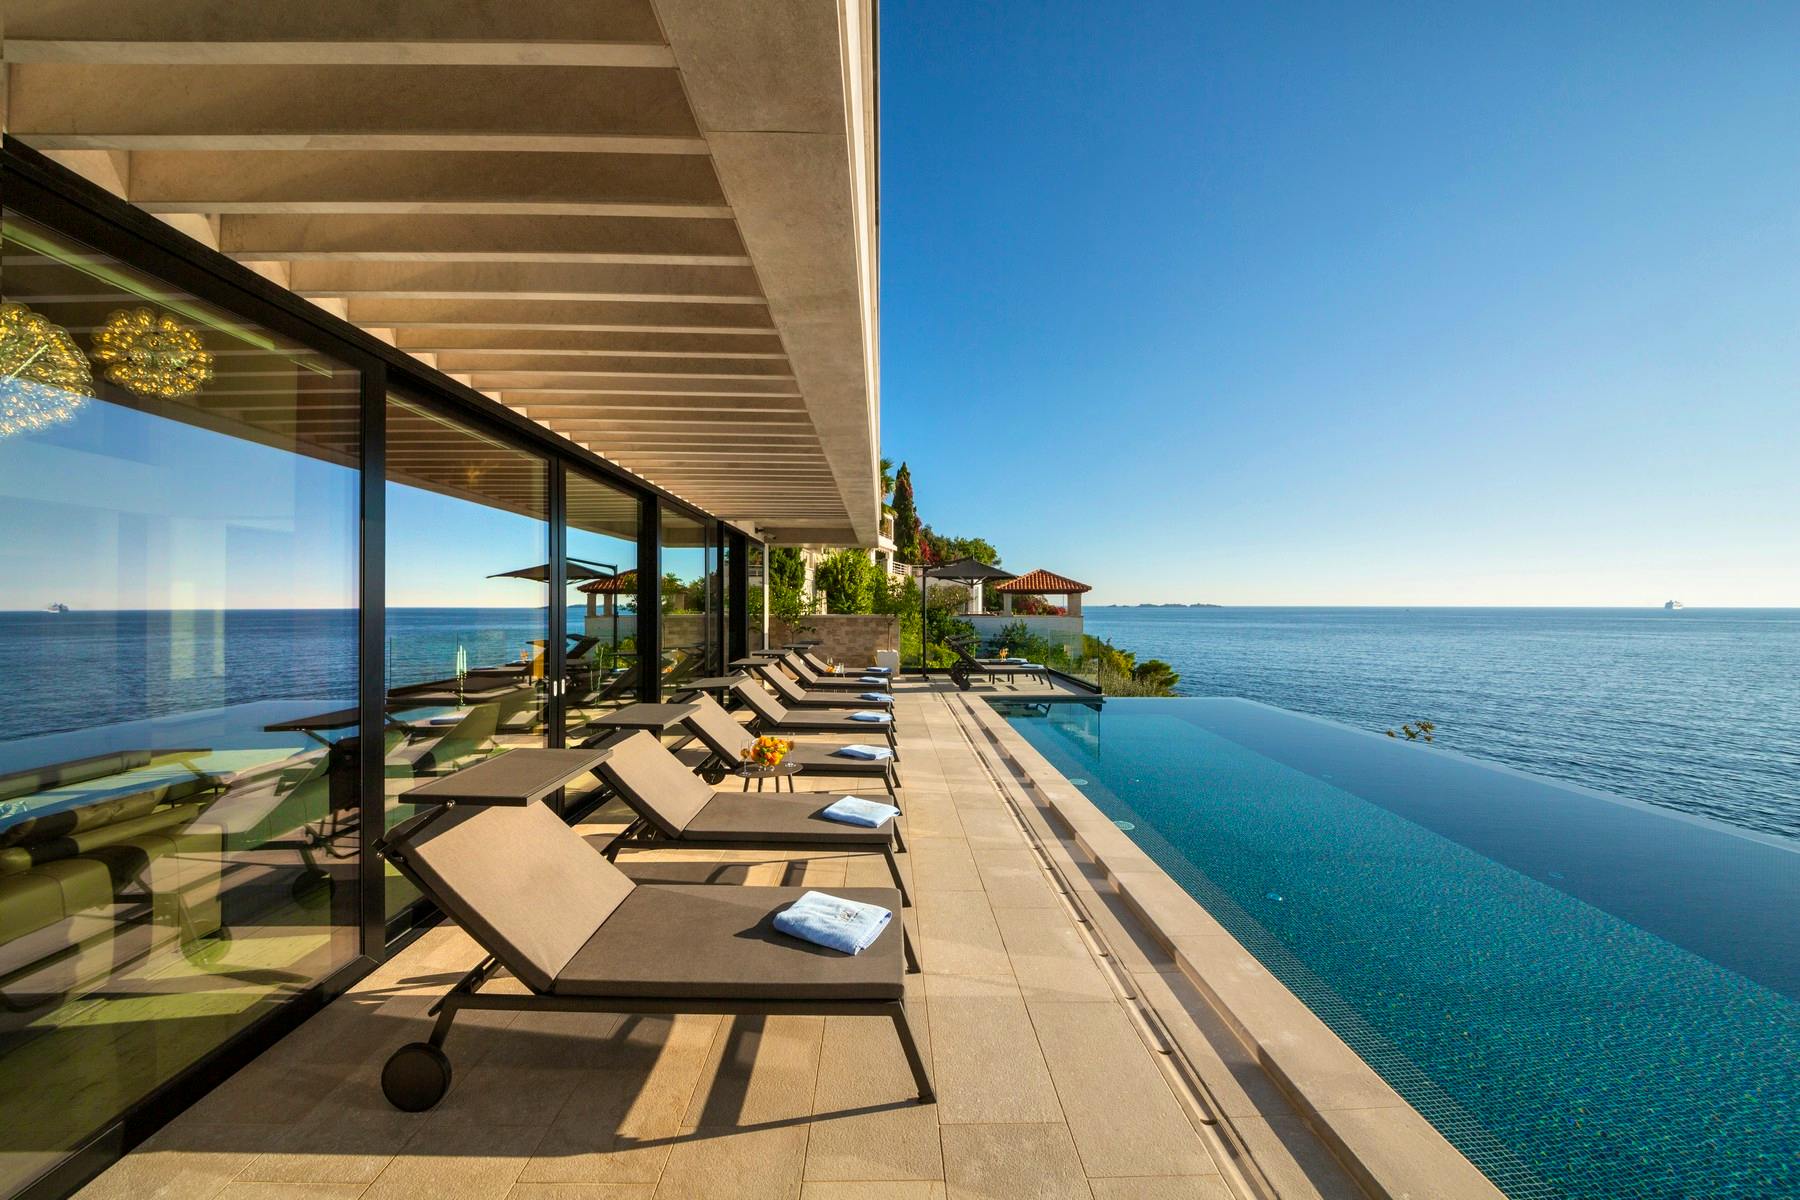 Infinity pool with sunbathing terrace